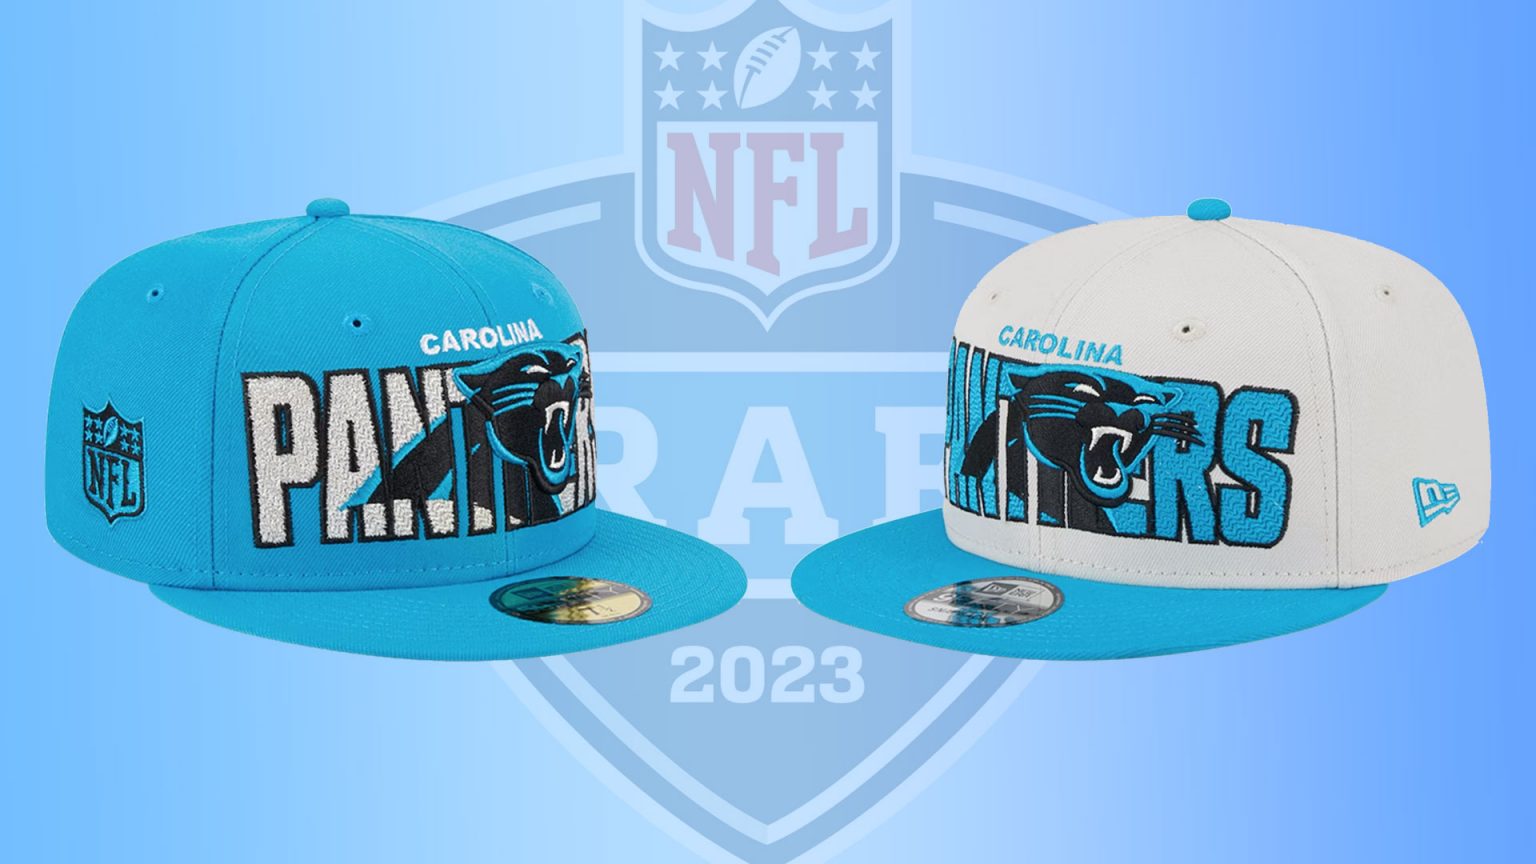 NFL, New Era Unveil 2023 NFL Draft Hats News